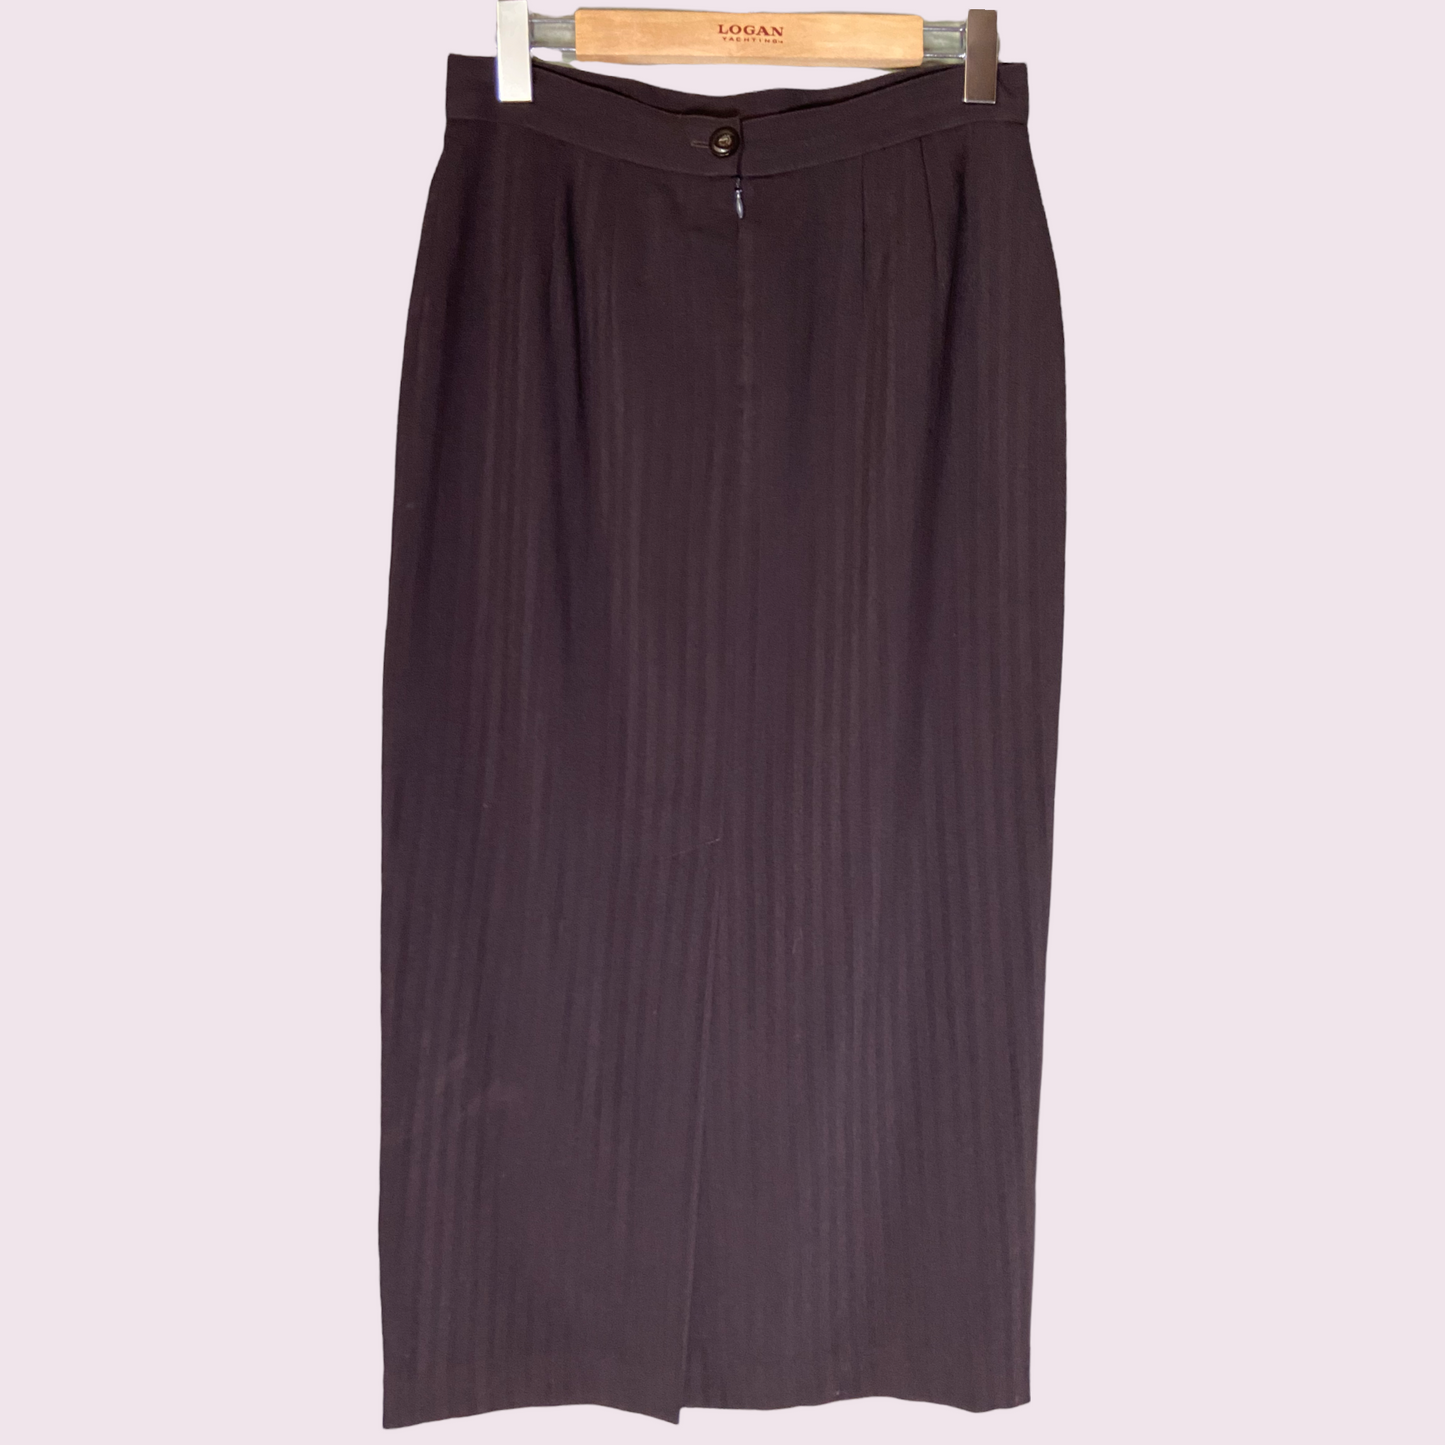 Laura Ashley 90’s Skirt Size 12